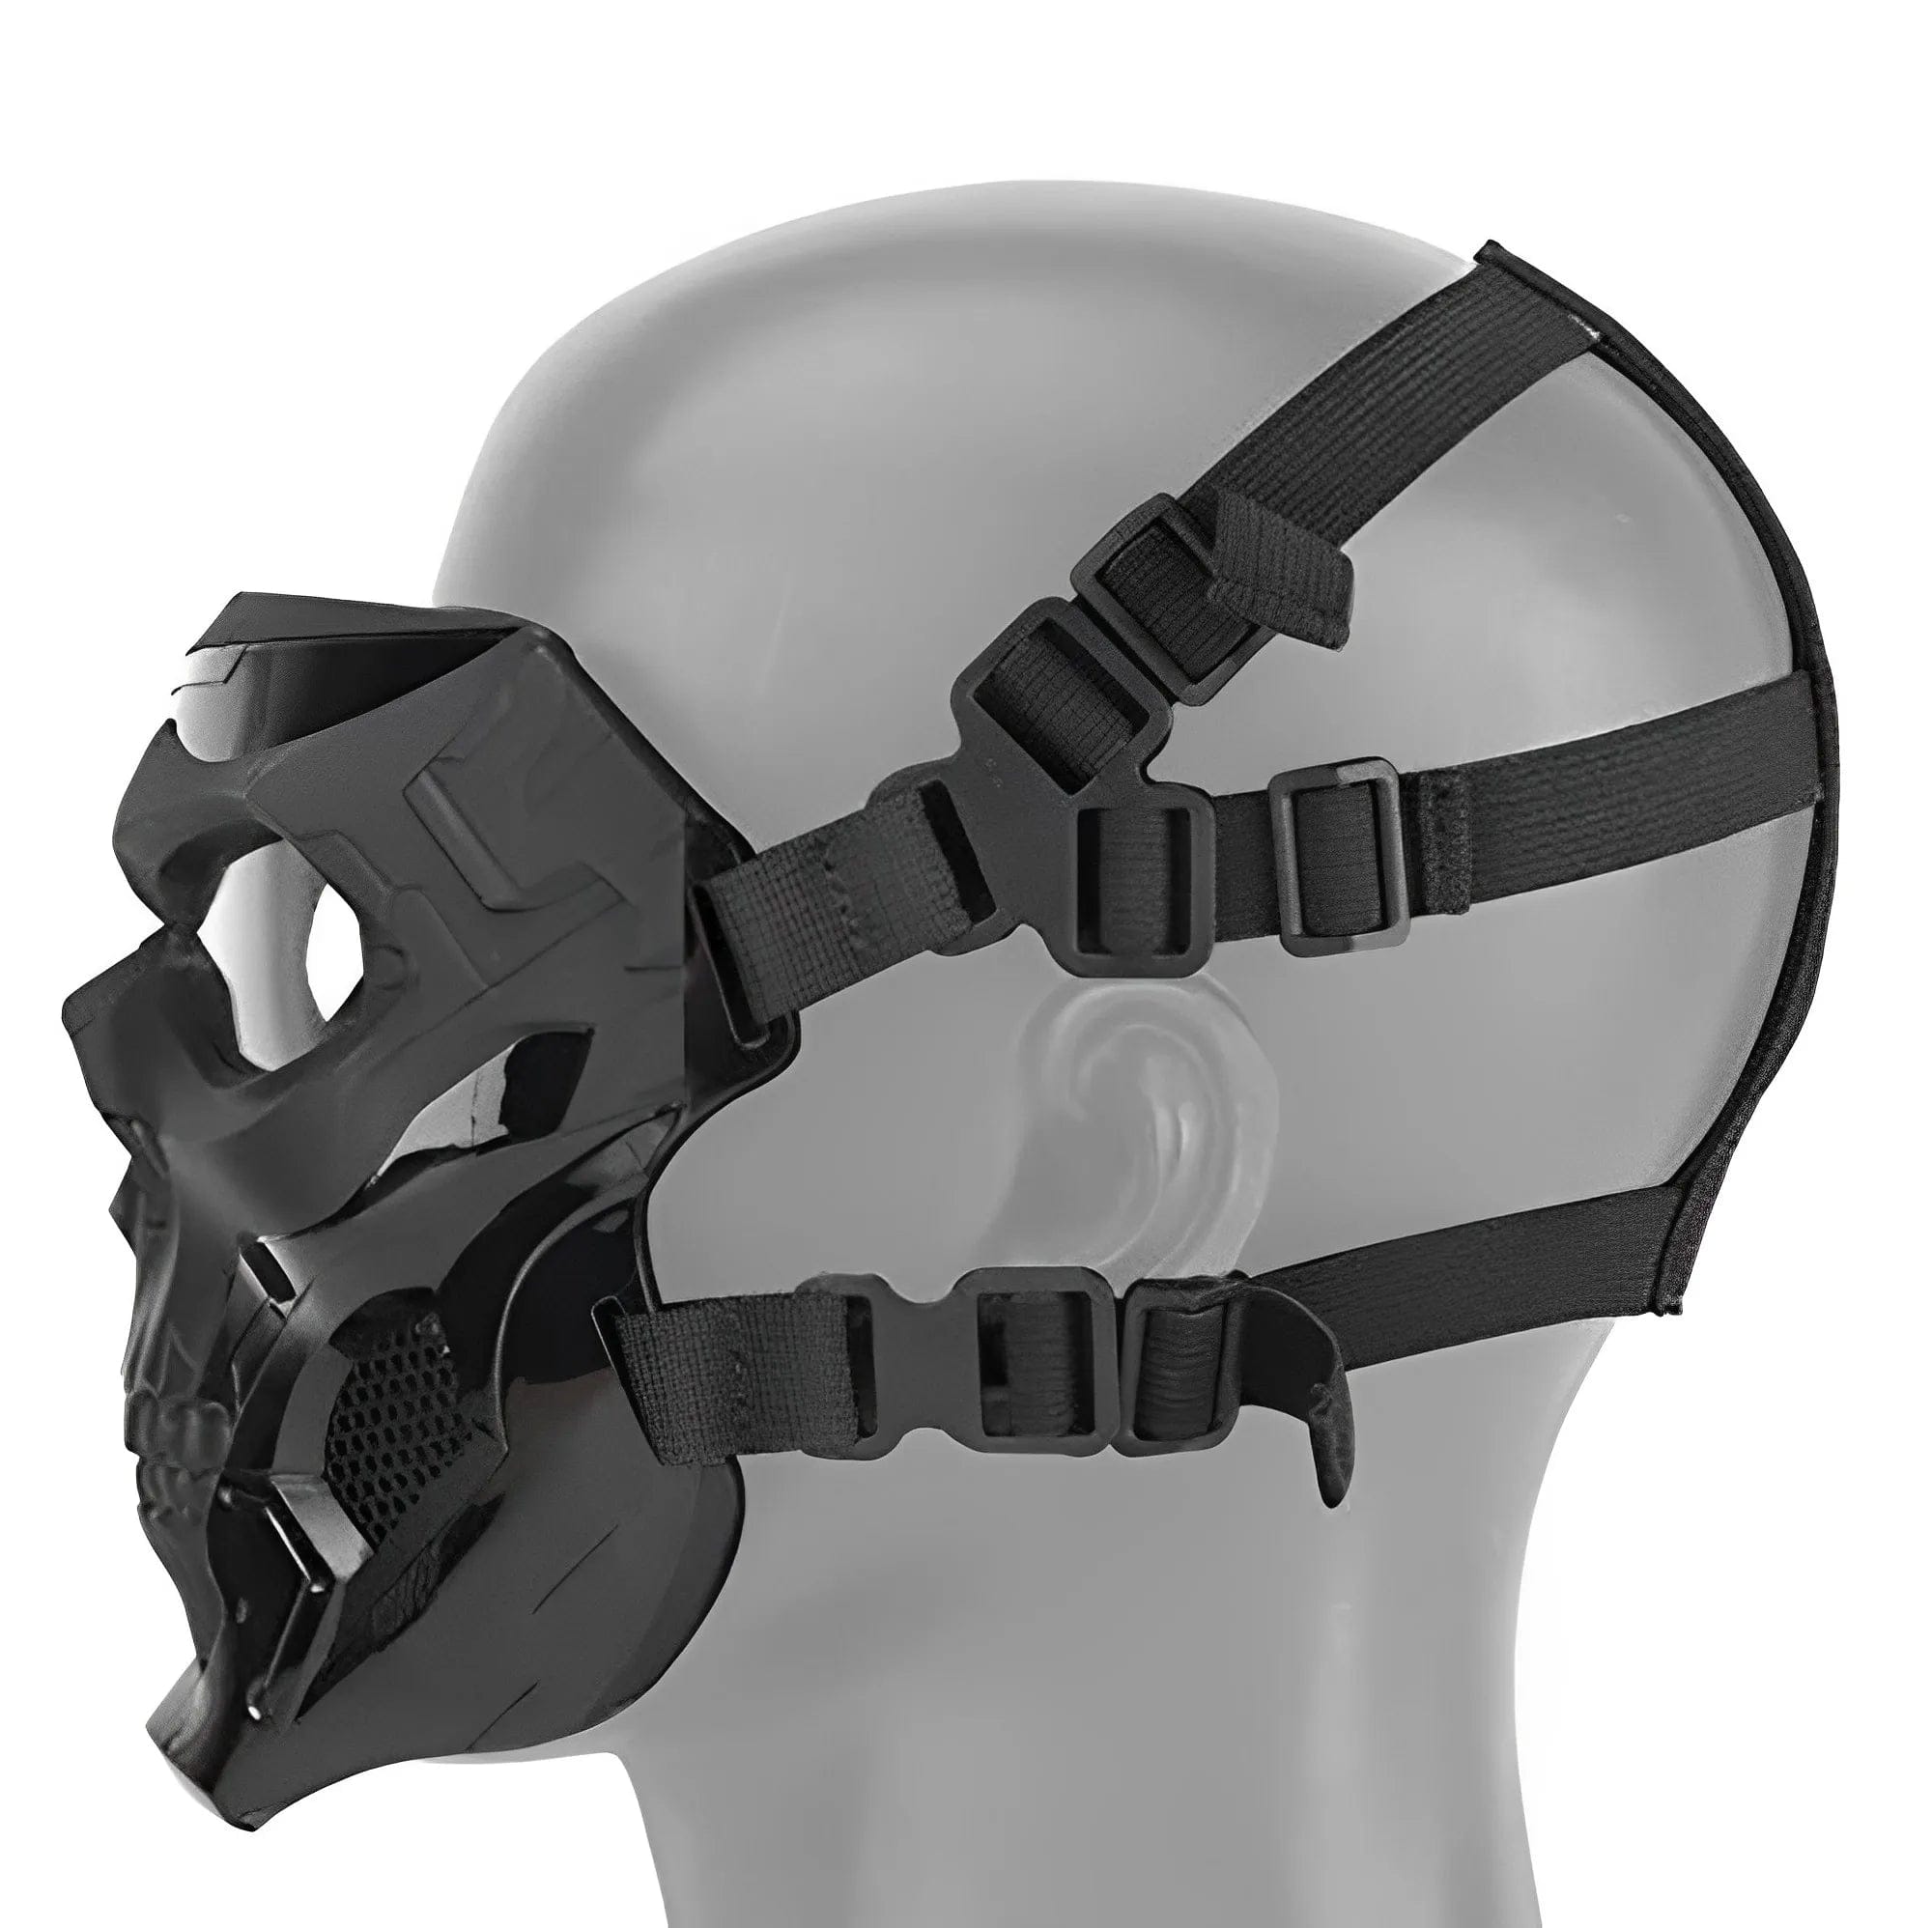 Masque de protection complet avec casque/paintball, masque airsoft 